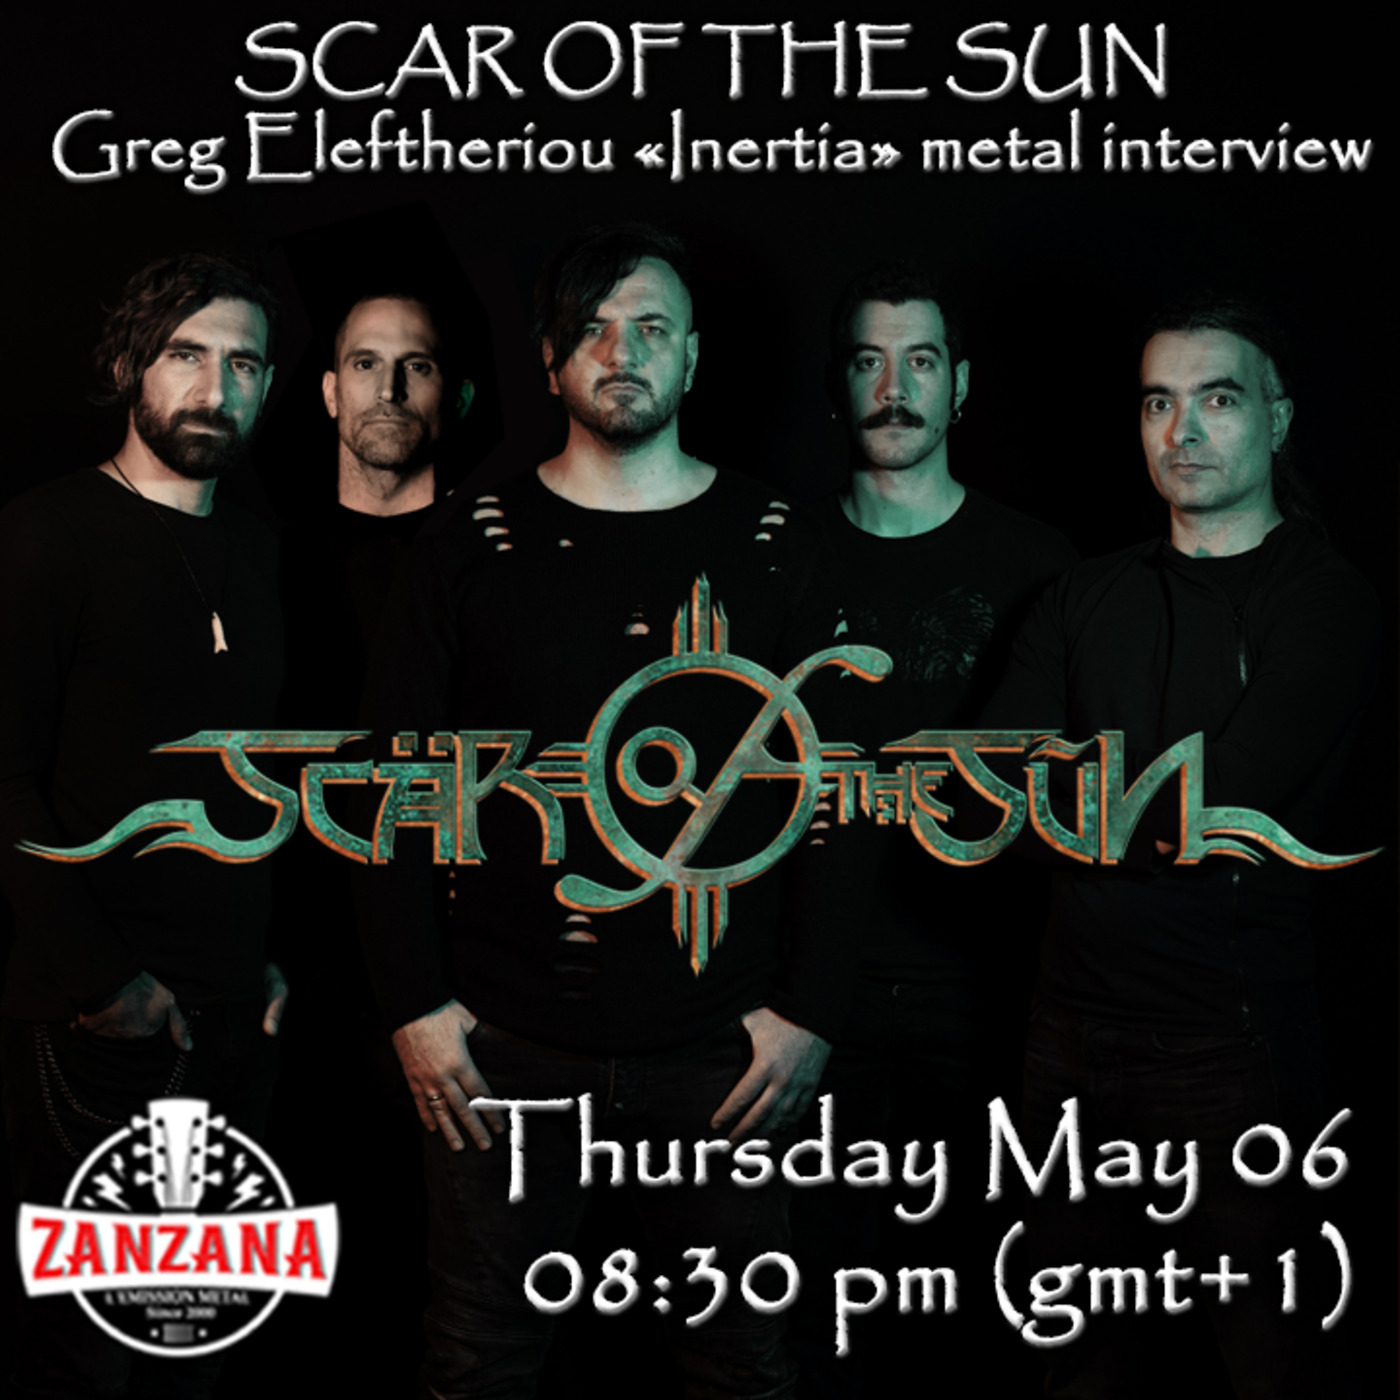 Scar Of The Sun metal interview about ”Inertia” - ZanZanA Live Stream Metal Interview  - May 06, 2021